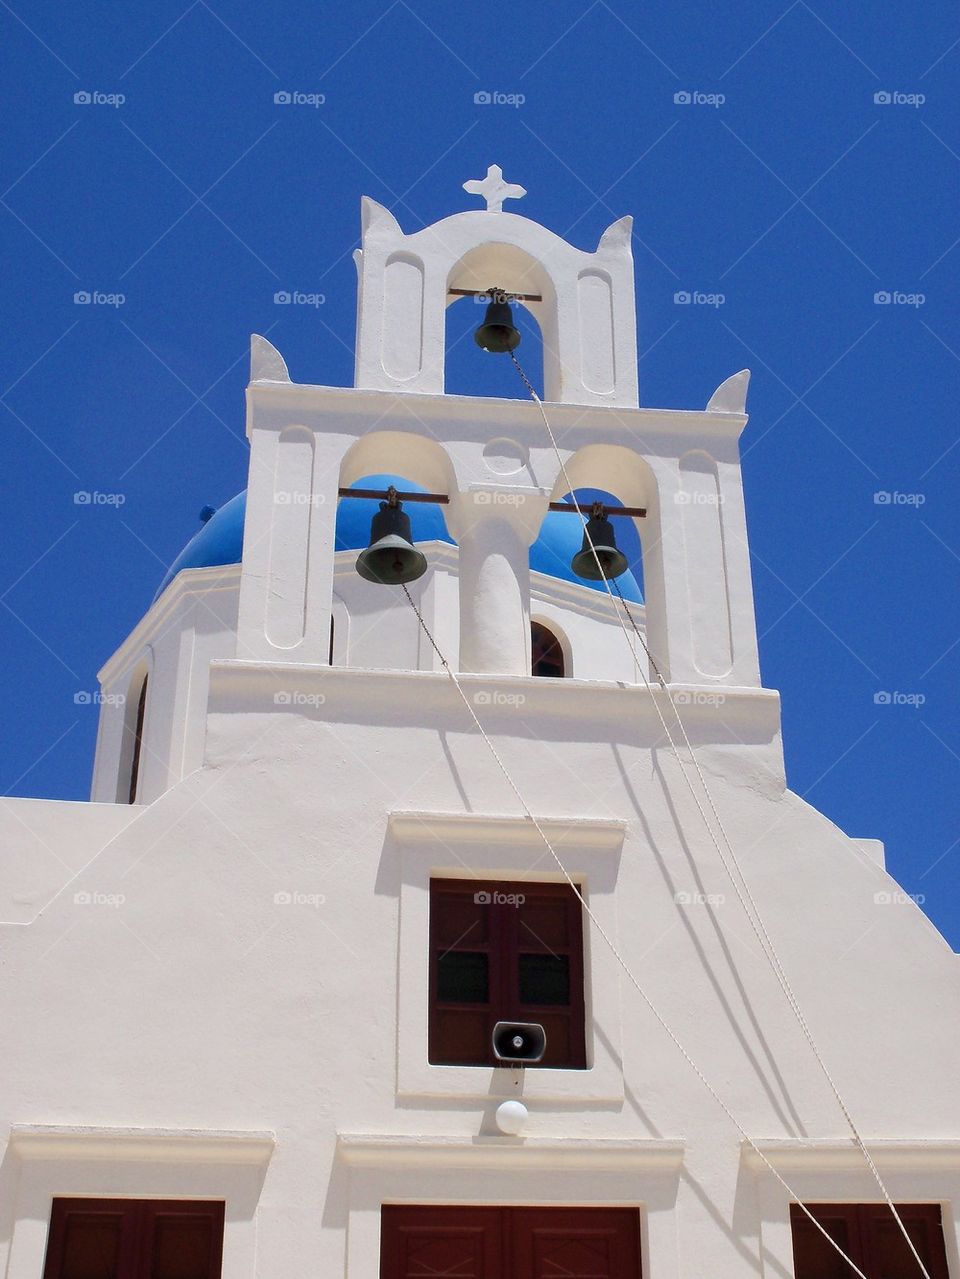 Santorini, Greece church